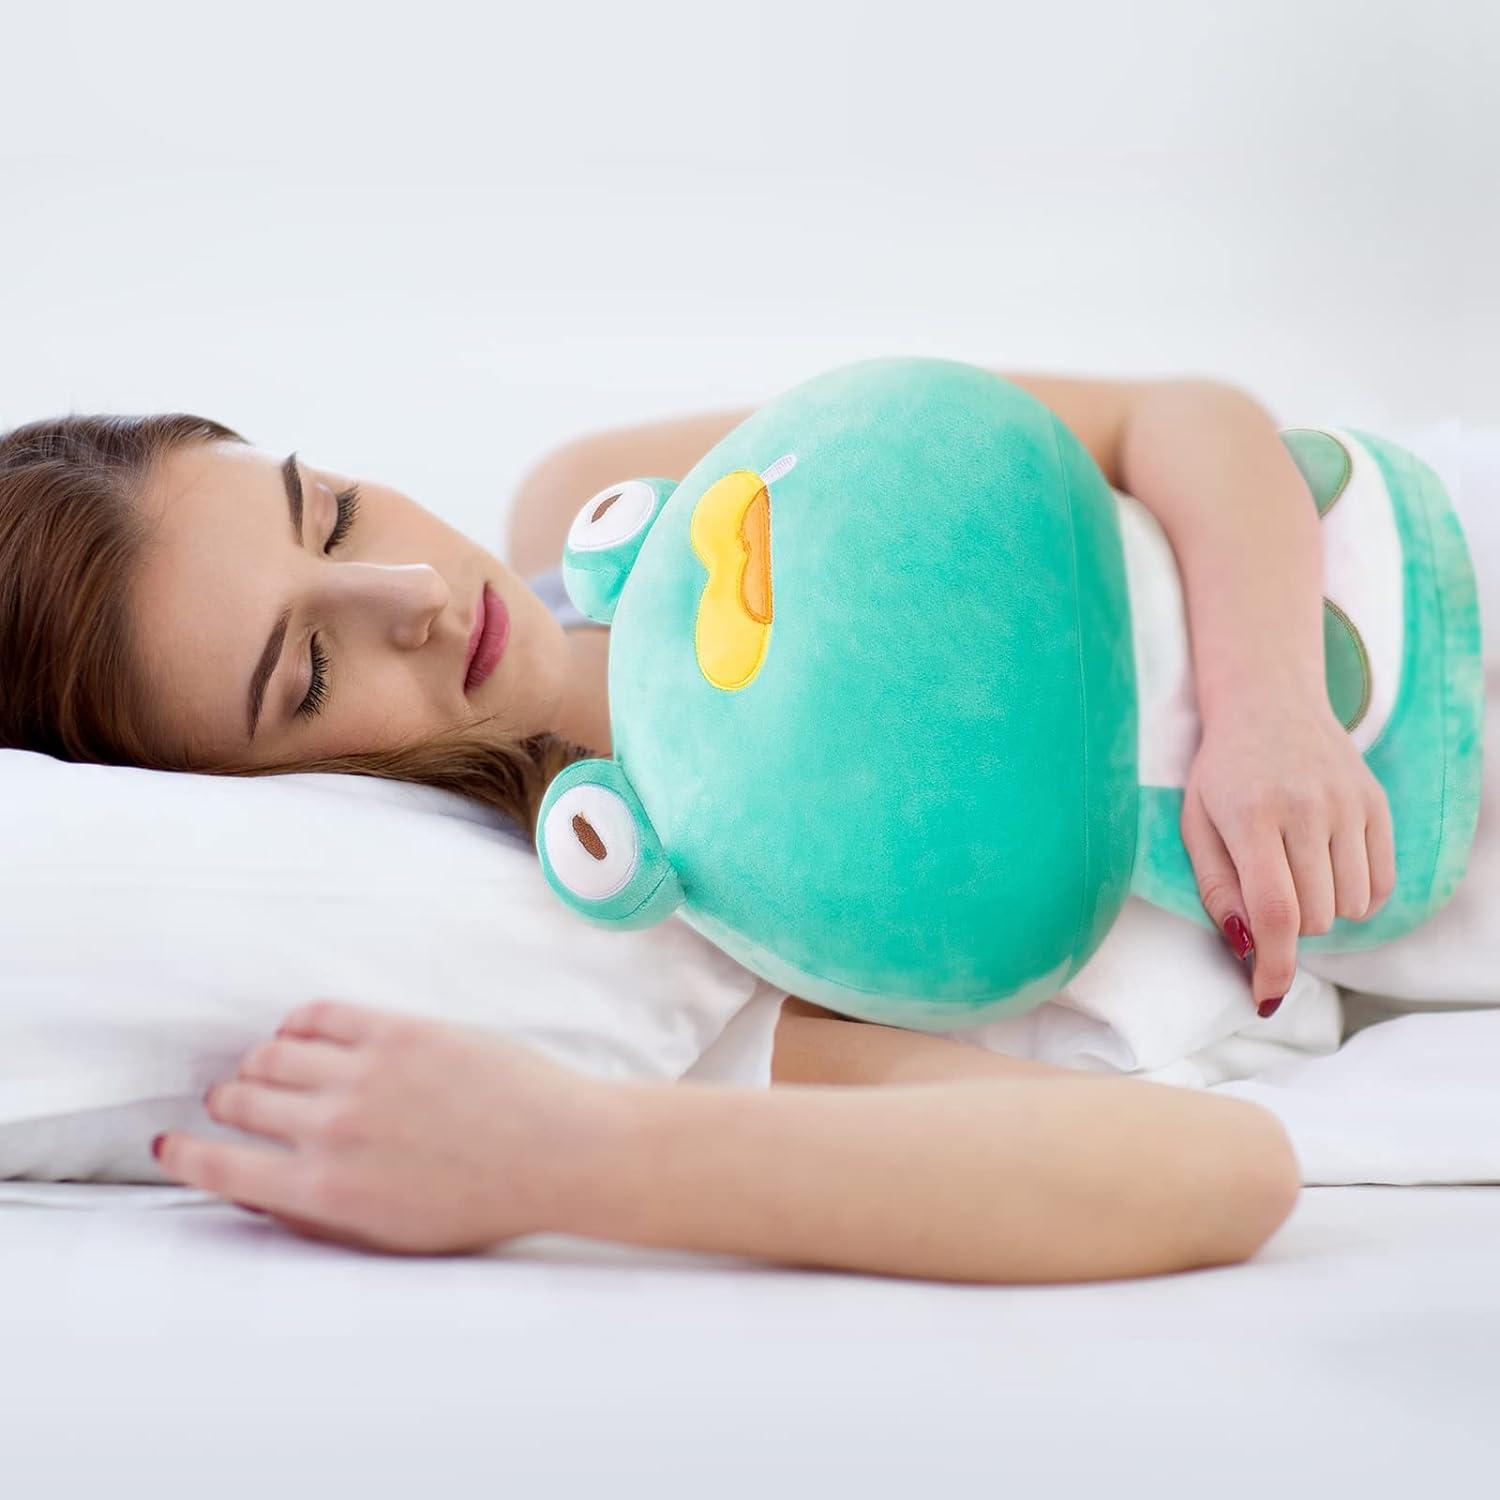 Mewaii 8'' Soft Frog Mushroom Plushie Stuffed Animal Plush Sleeping Pillow  Squishy Toy - Green Green Frog 8 Inch